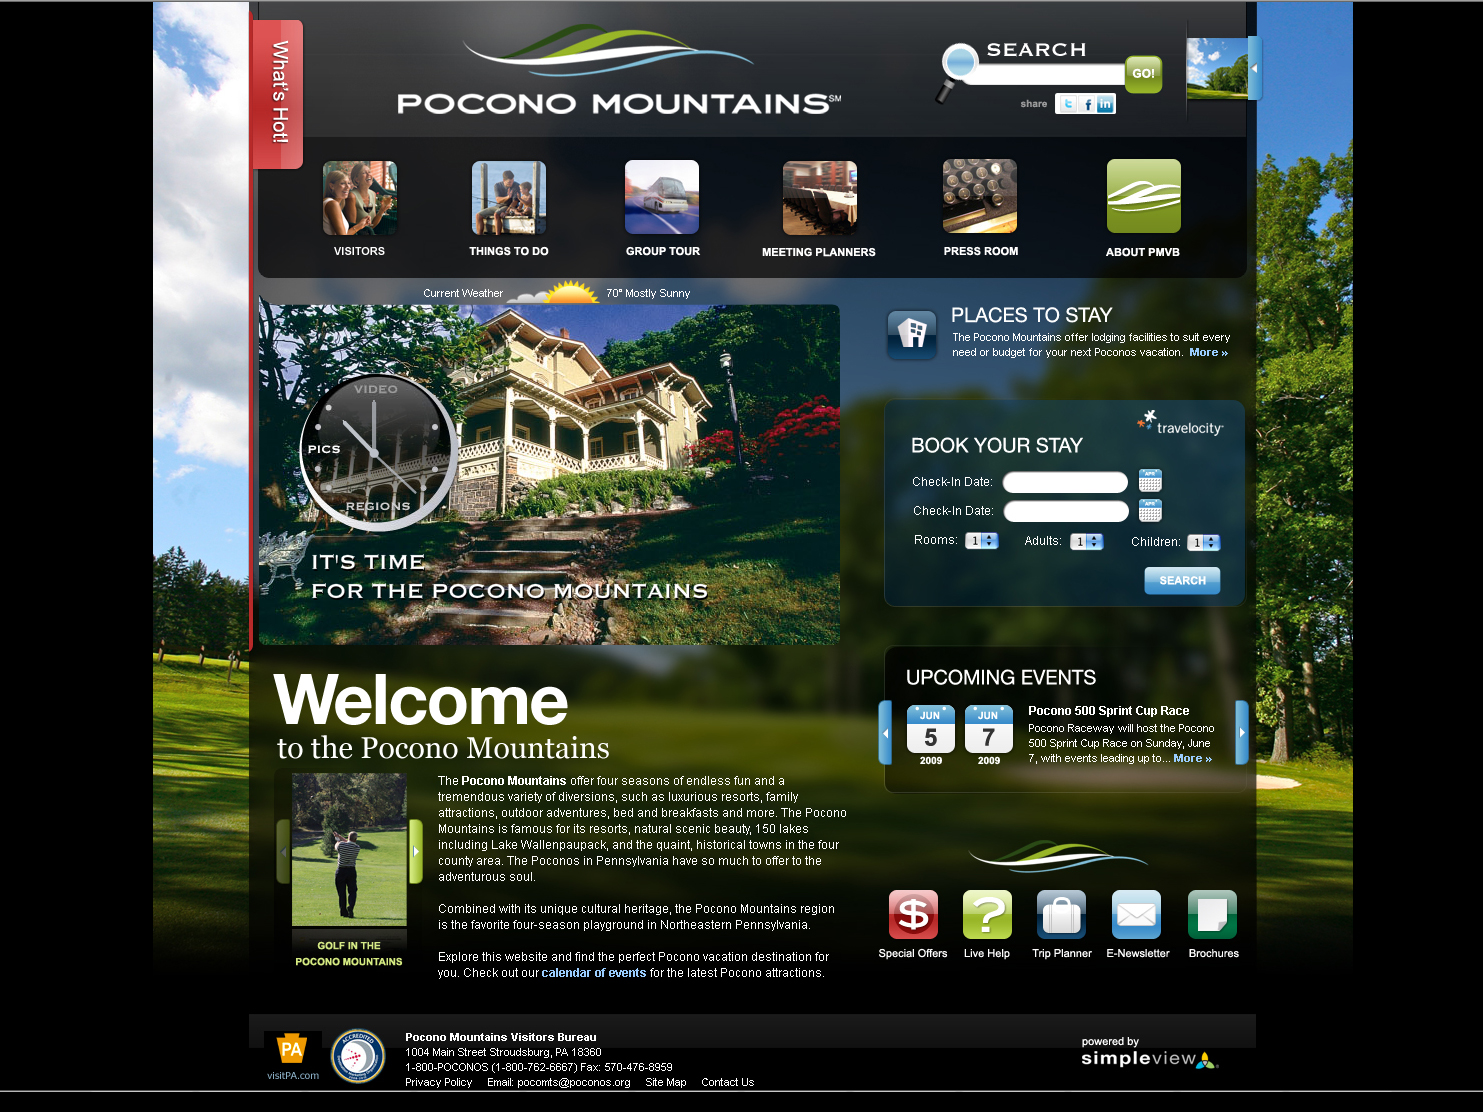 Pocono Mountains Visitors Bureau Website image